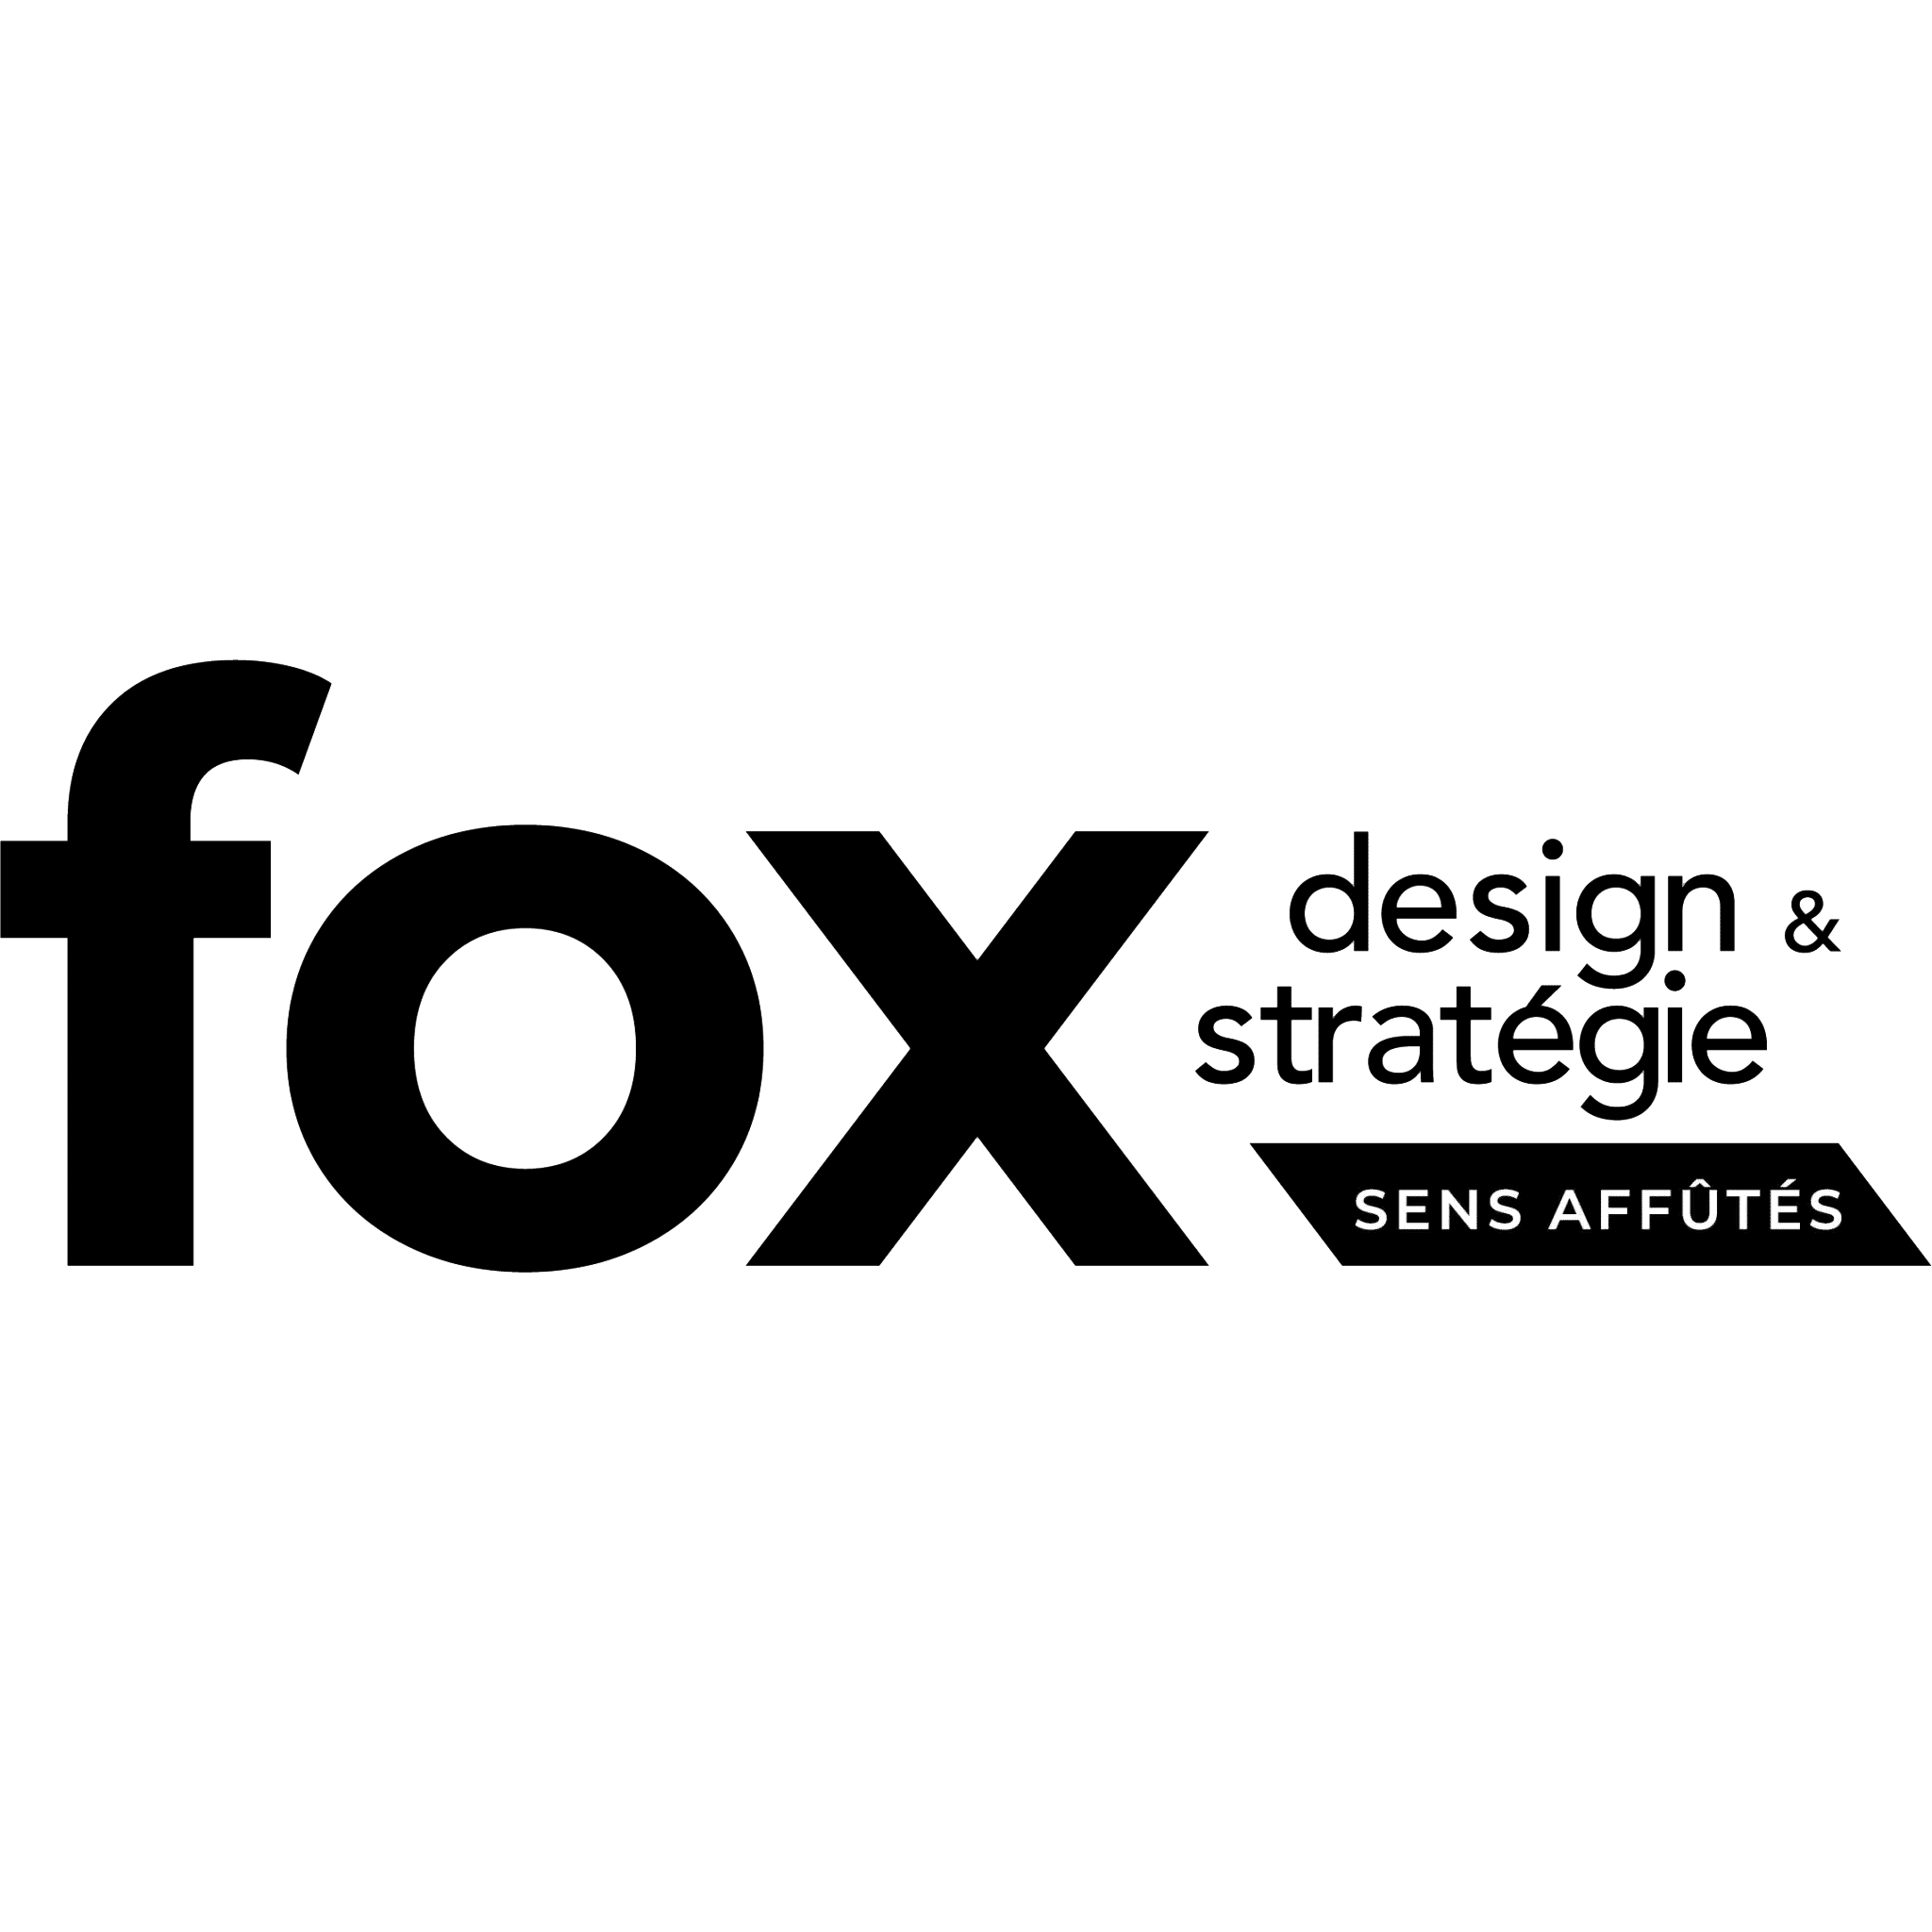 Logo Fox Design & strategie